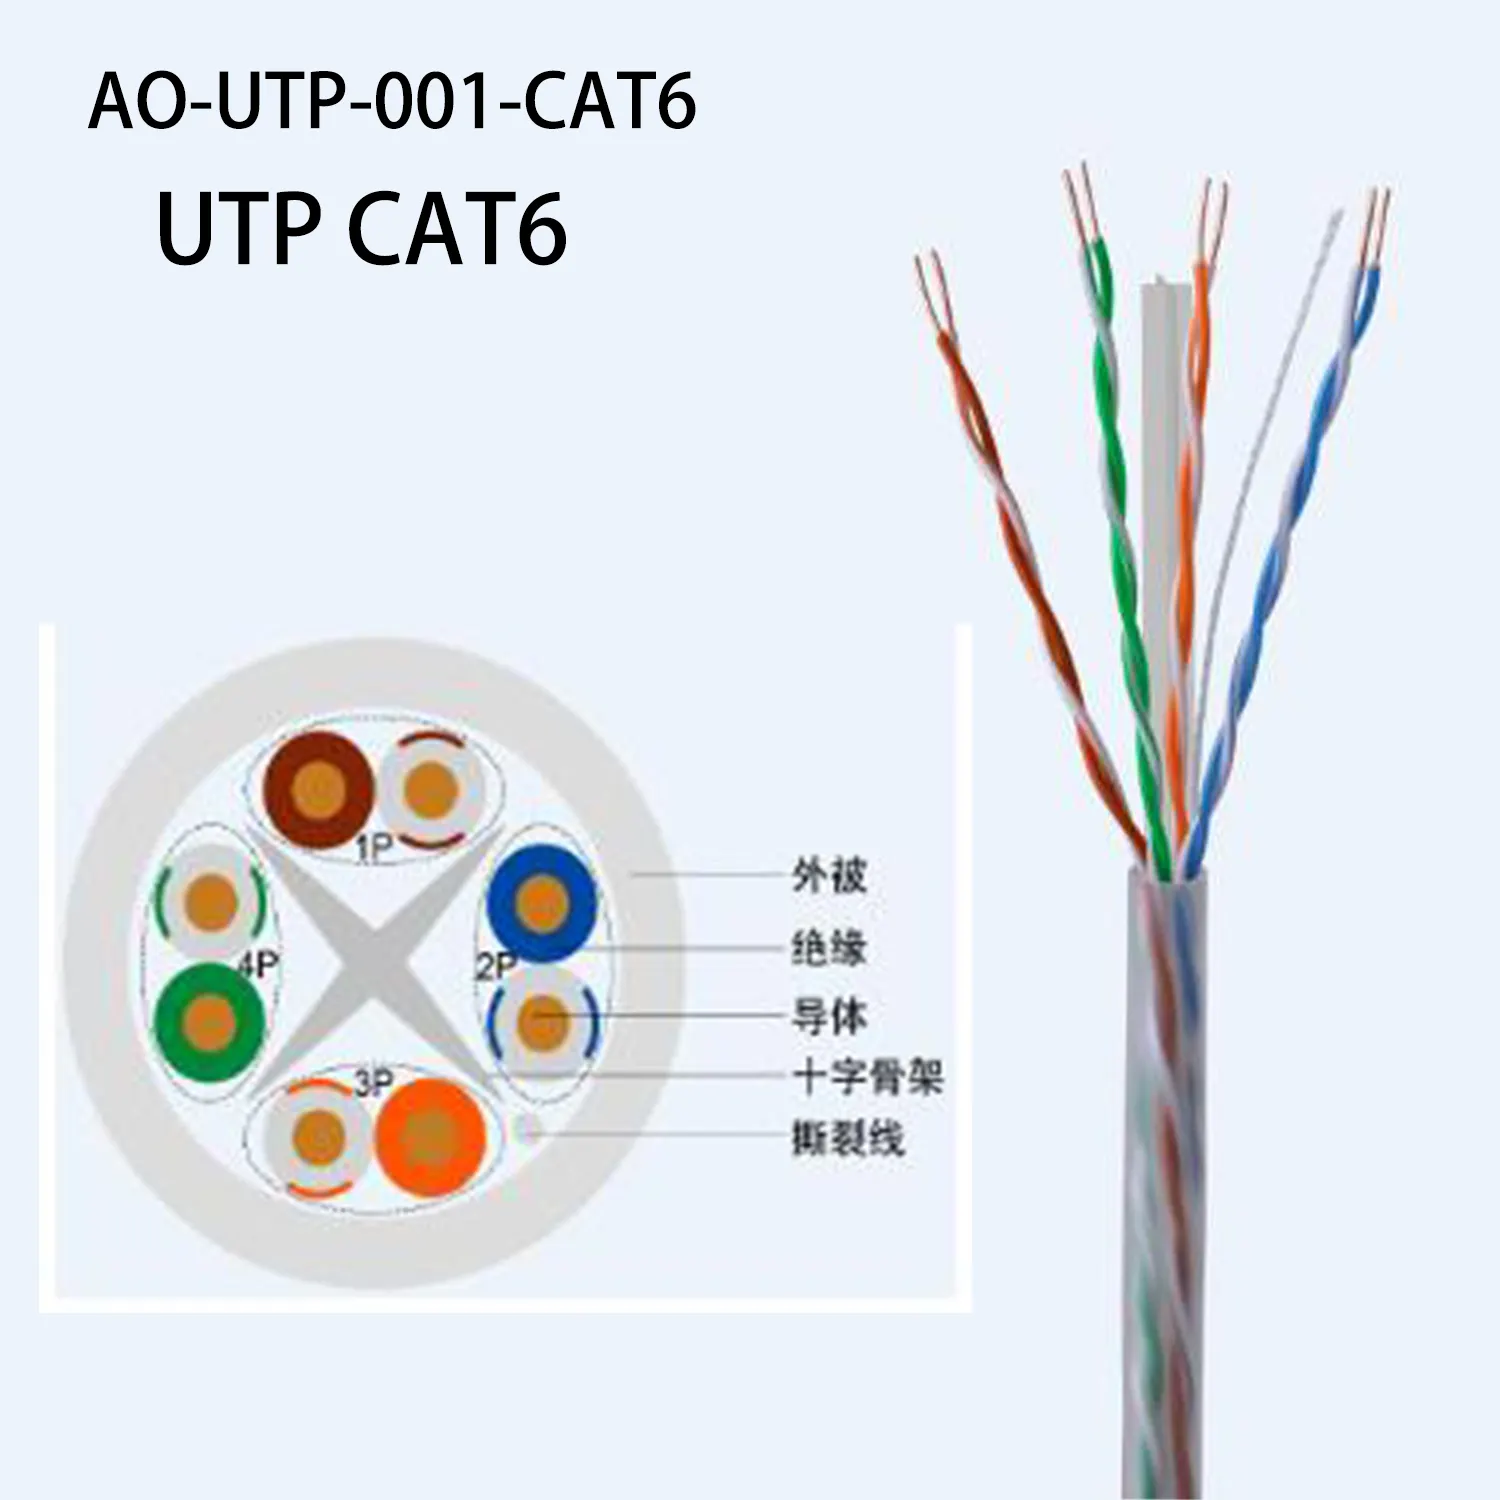 Cat6 Riser (CMR) 4 Pair Solid Bare Copper 550MHz PoE++ (4PPoE) ETL Listed Unshielded Twisted Pair (UTP) Bulk Ethernet Cable